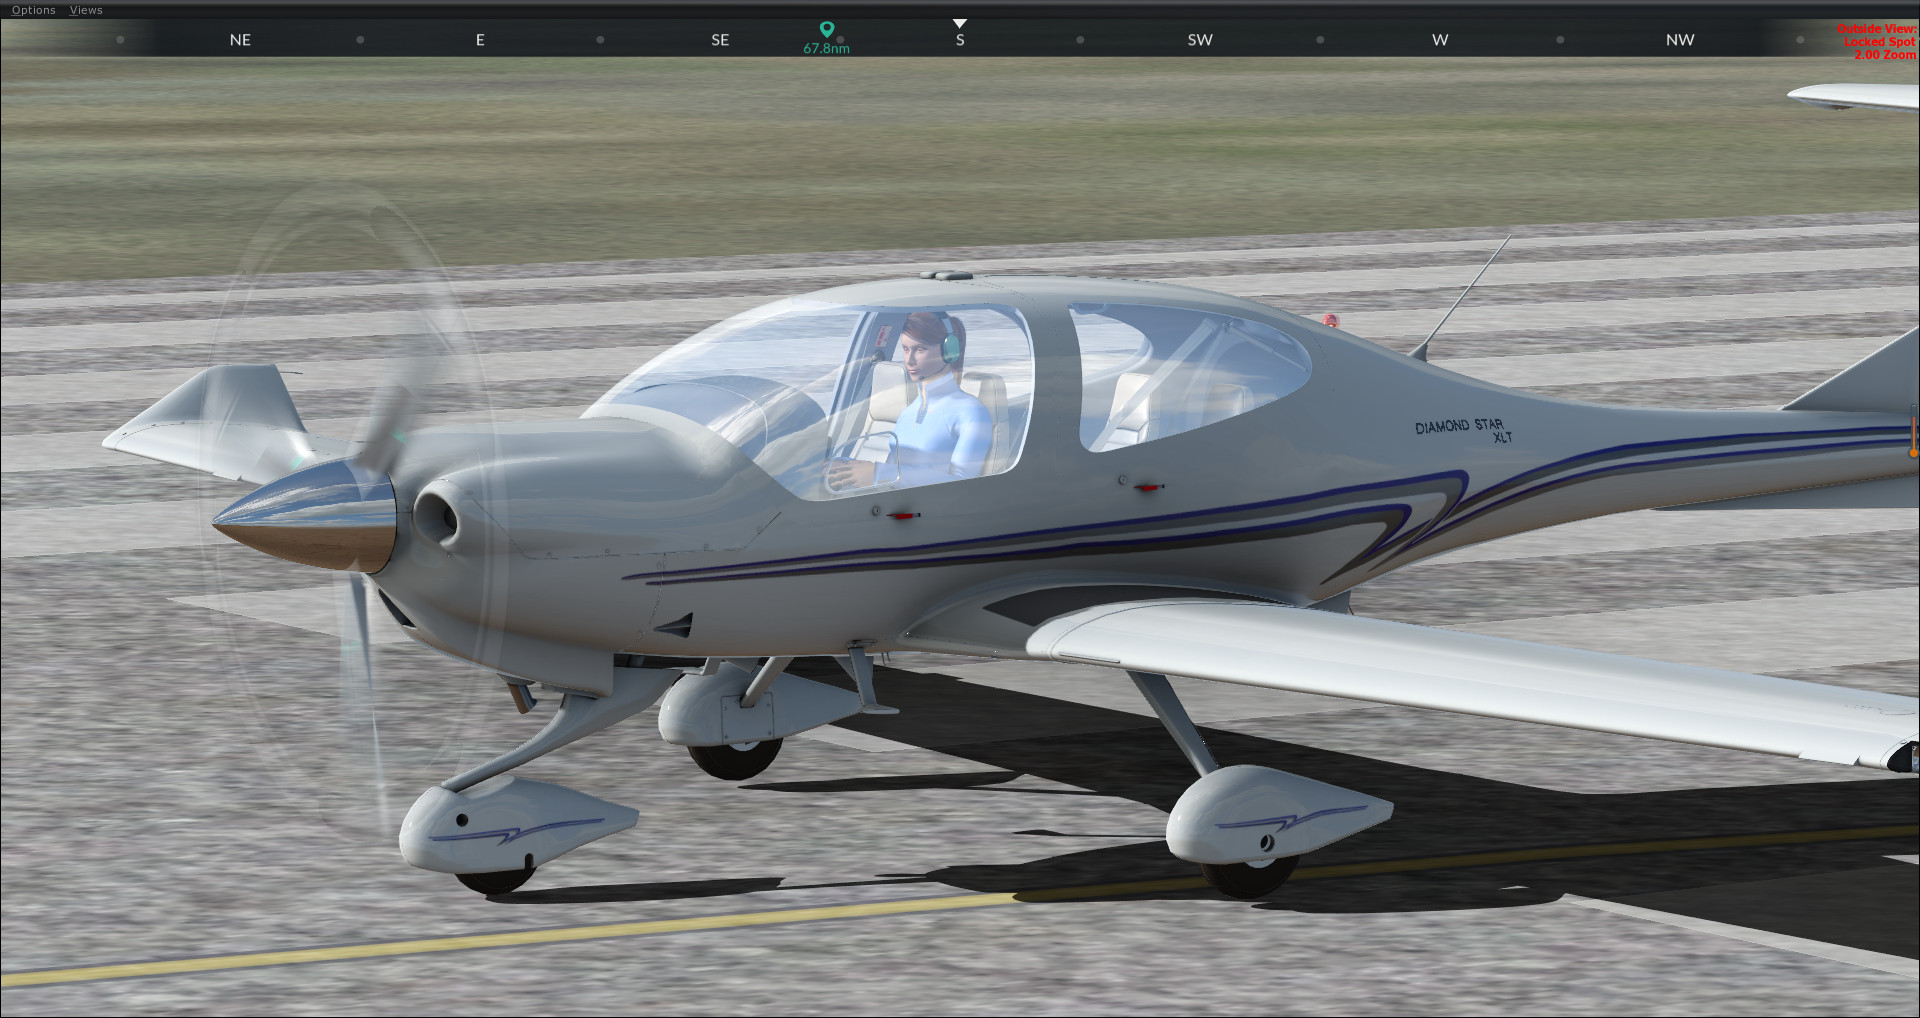 Flight Sim World默认七款小型飞机图片-7226 